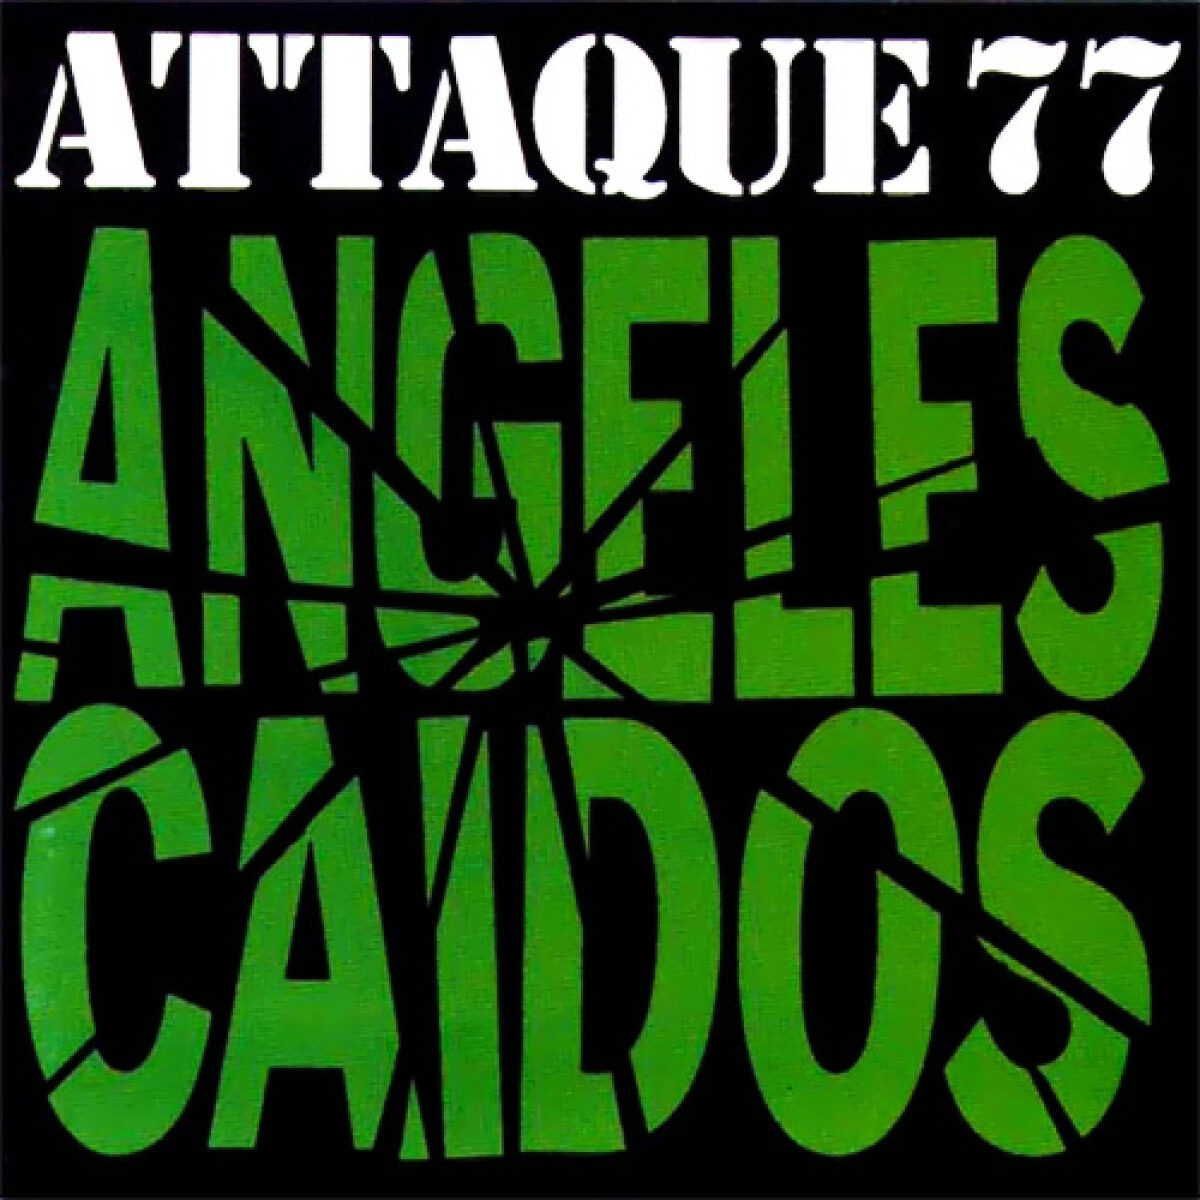 Attaque 77-angeles Caidos - Vinilo 